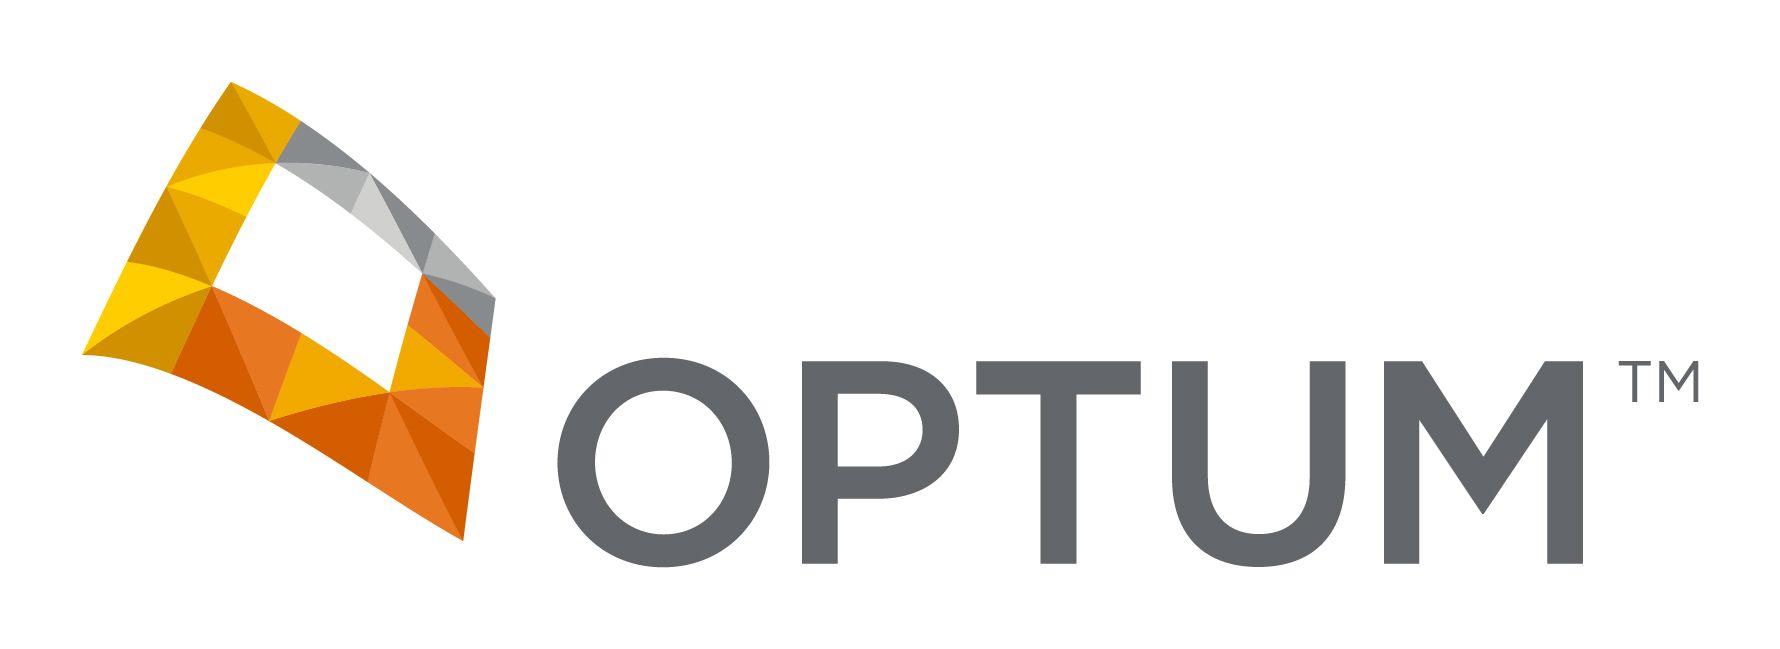 Optum Logo - Ben Barnhart 4.2: Optum Logo | ben barnhart's marketing Blog